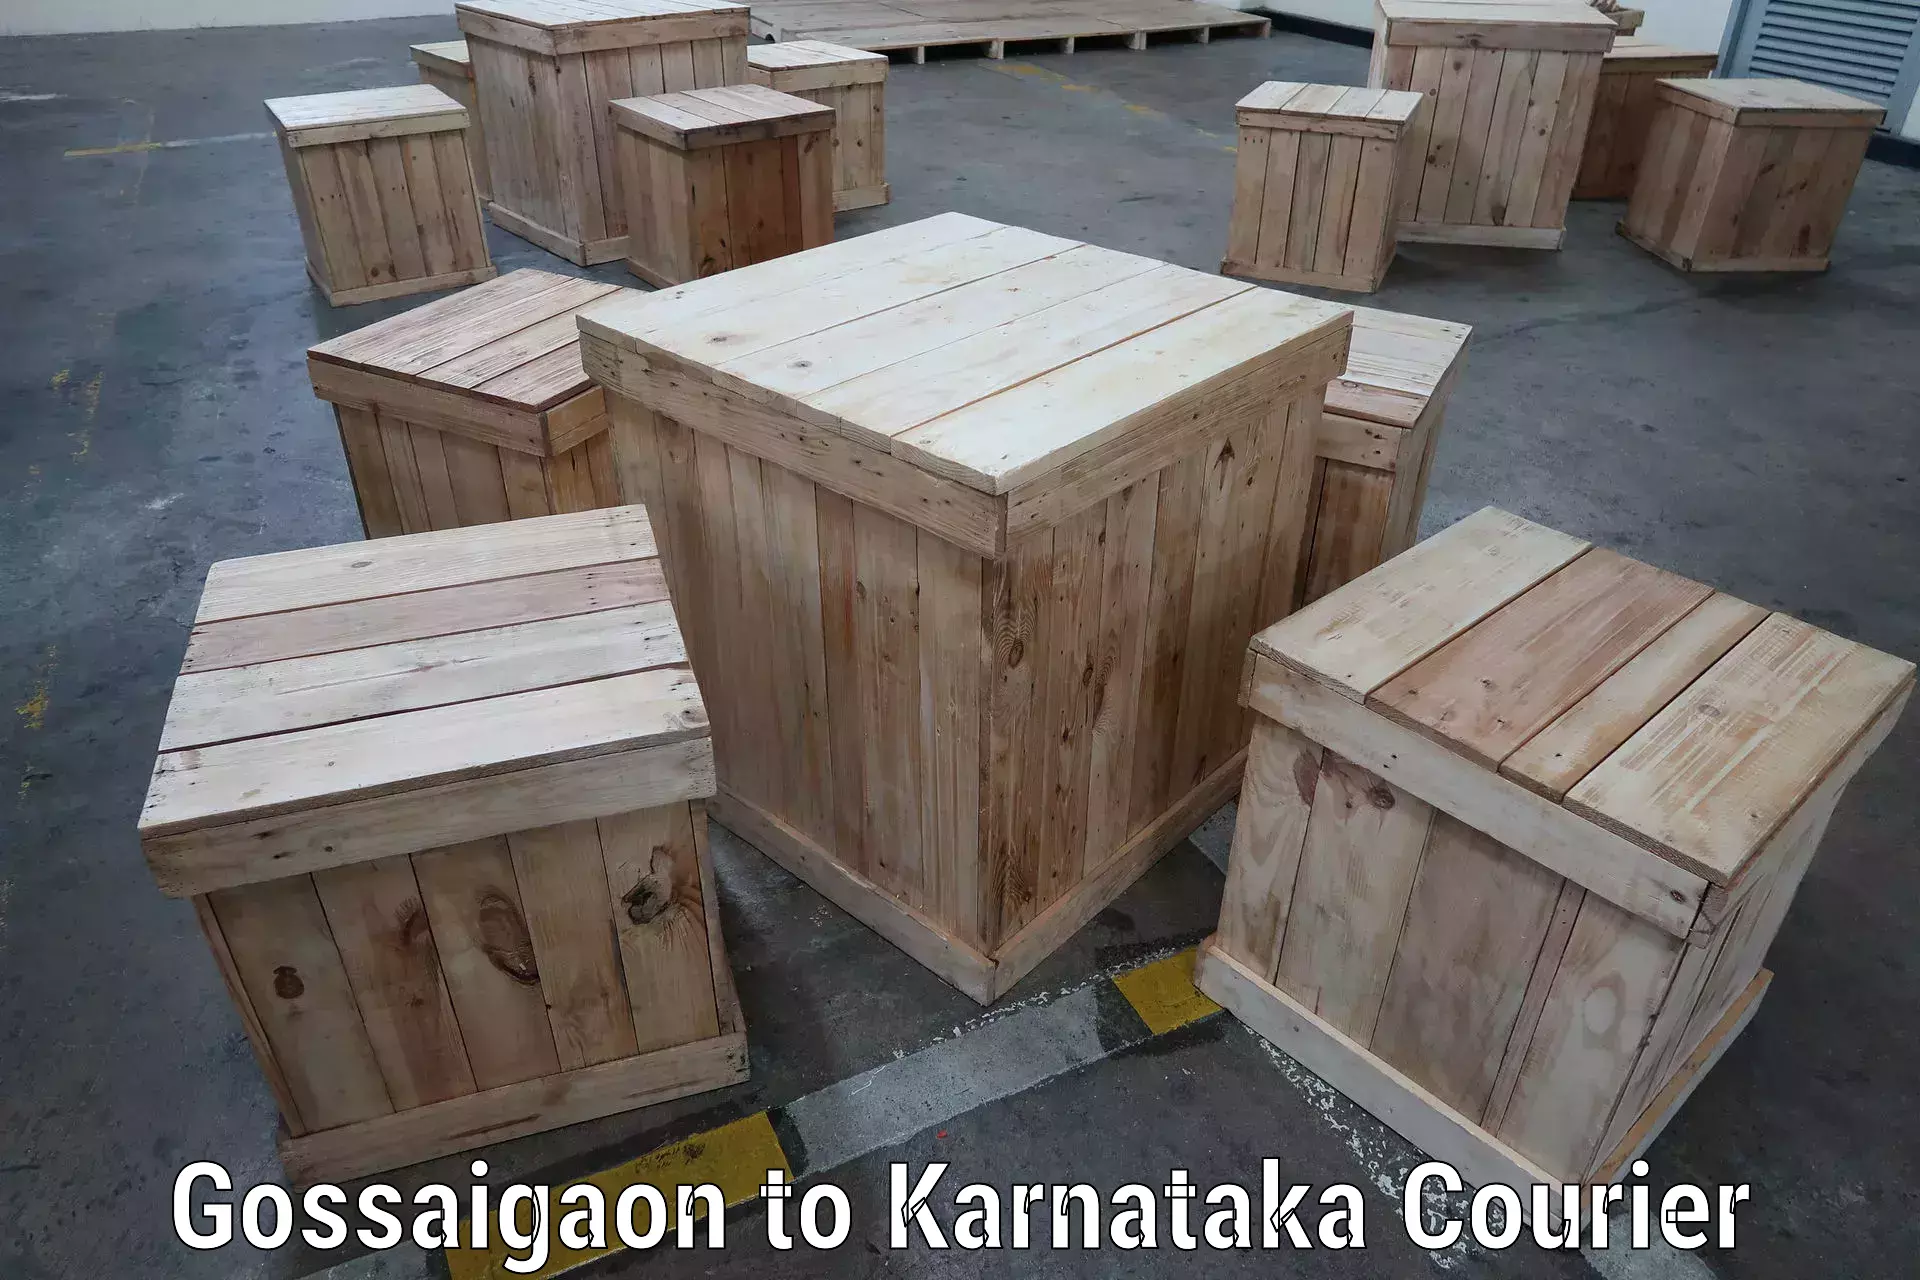 Professional courier handling Gossaigaon to Karnataka